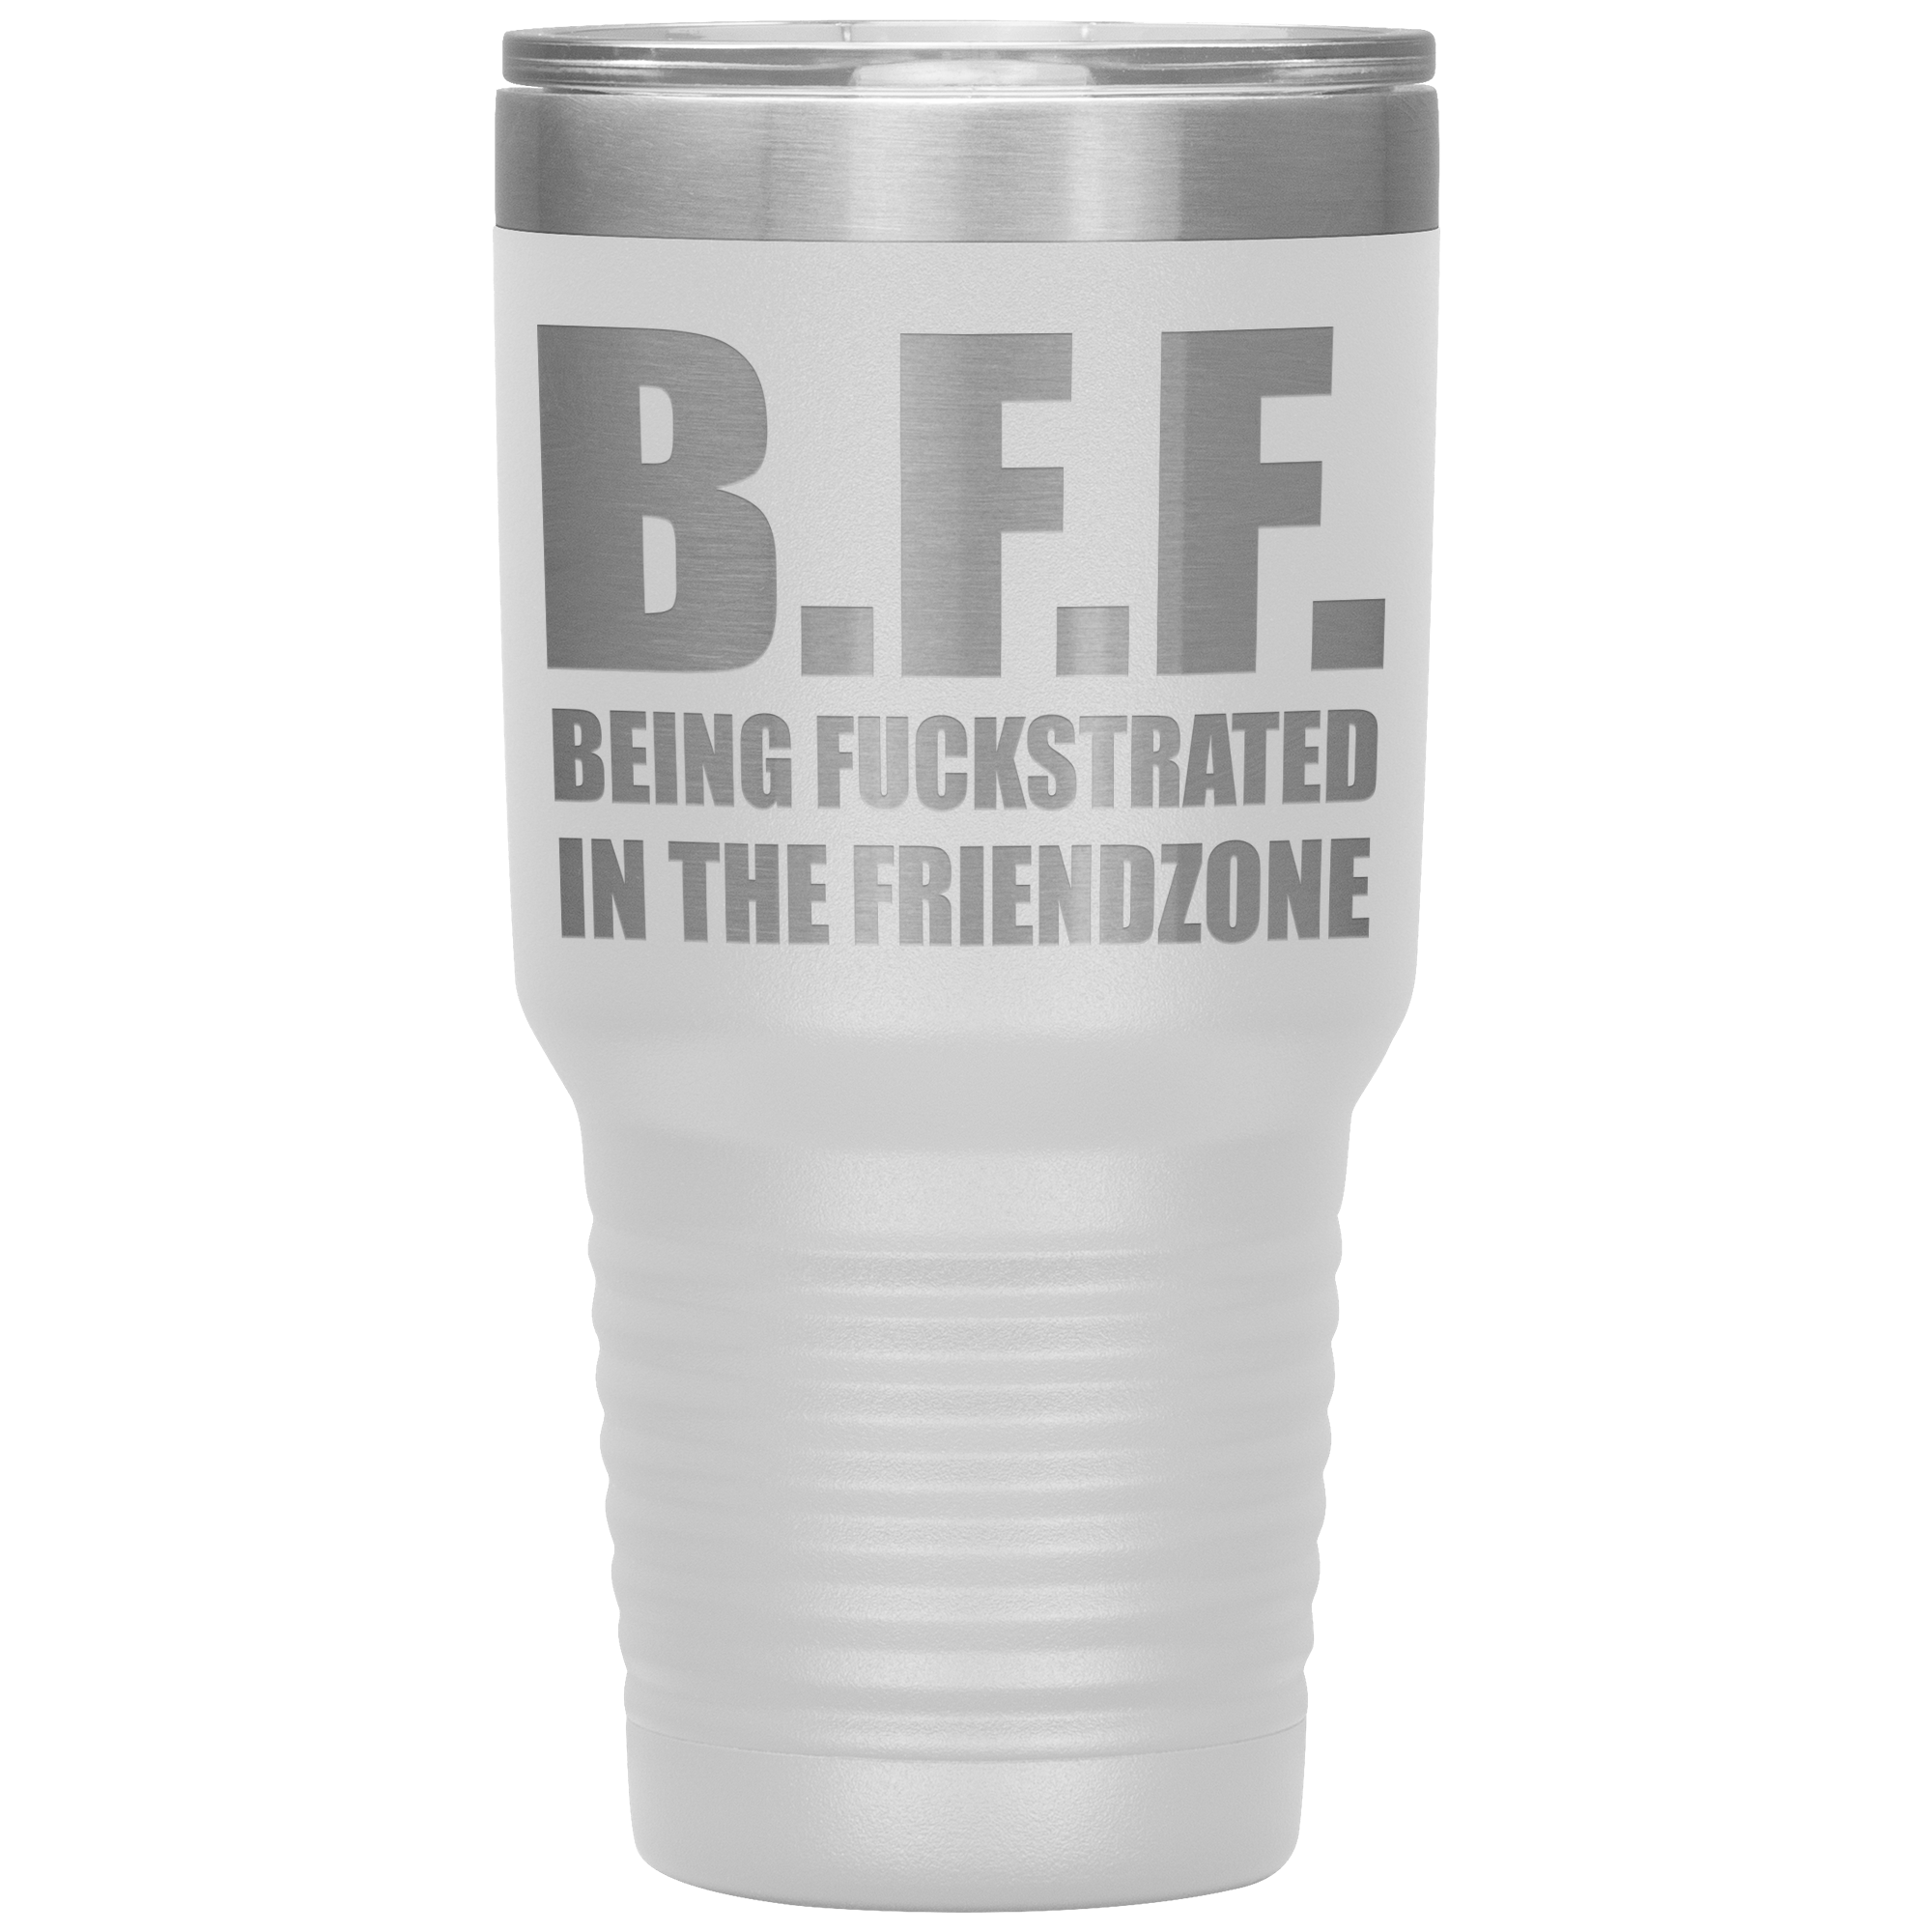 B.F.F  BEING FUCKSTRATED IN  THE FRIENDZONE - TUMBLER